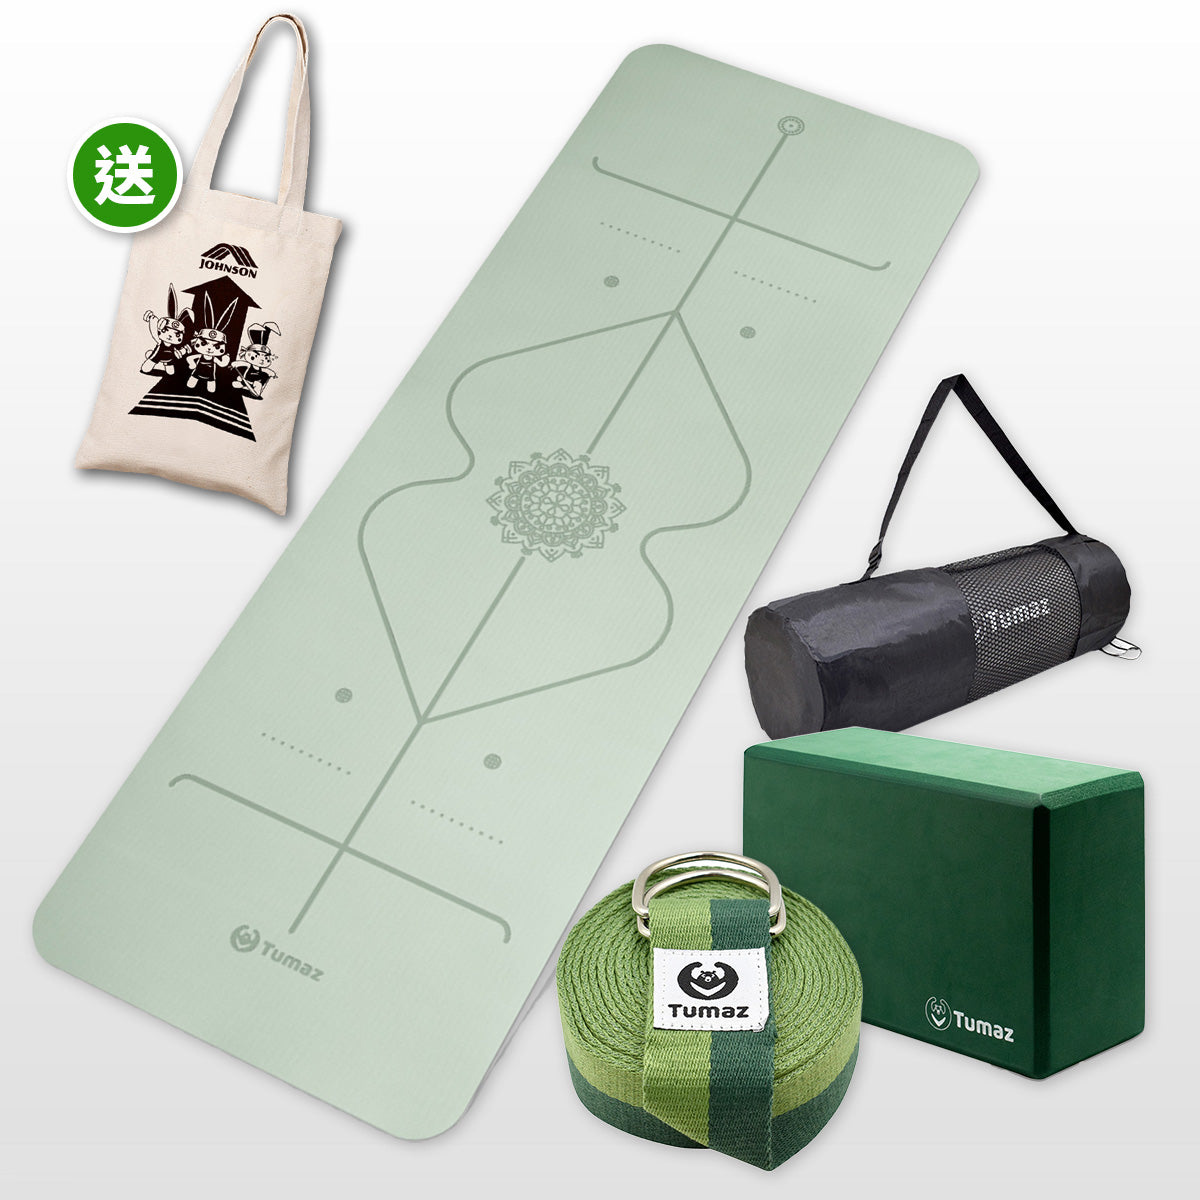 Tumaz 瑜珈運動四件套組(綠色)送喬山限量提袋  親友團購組